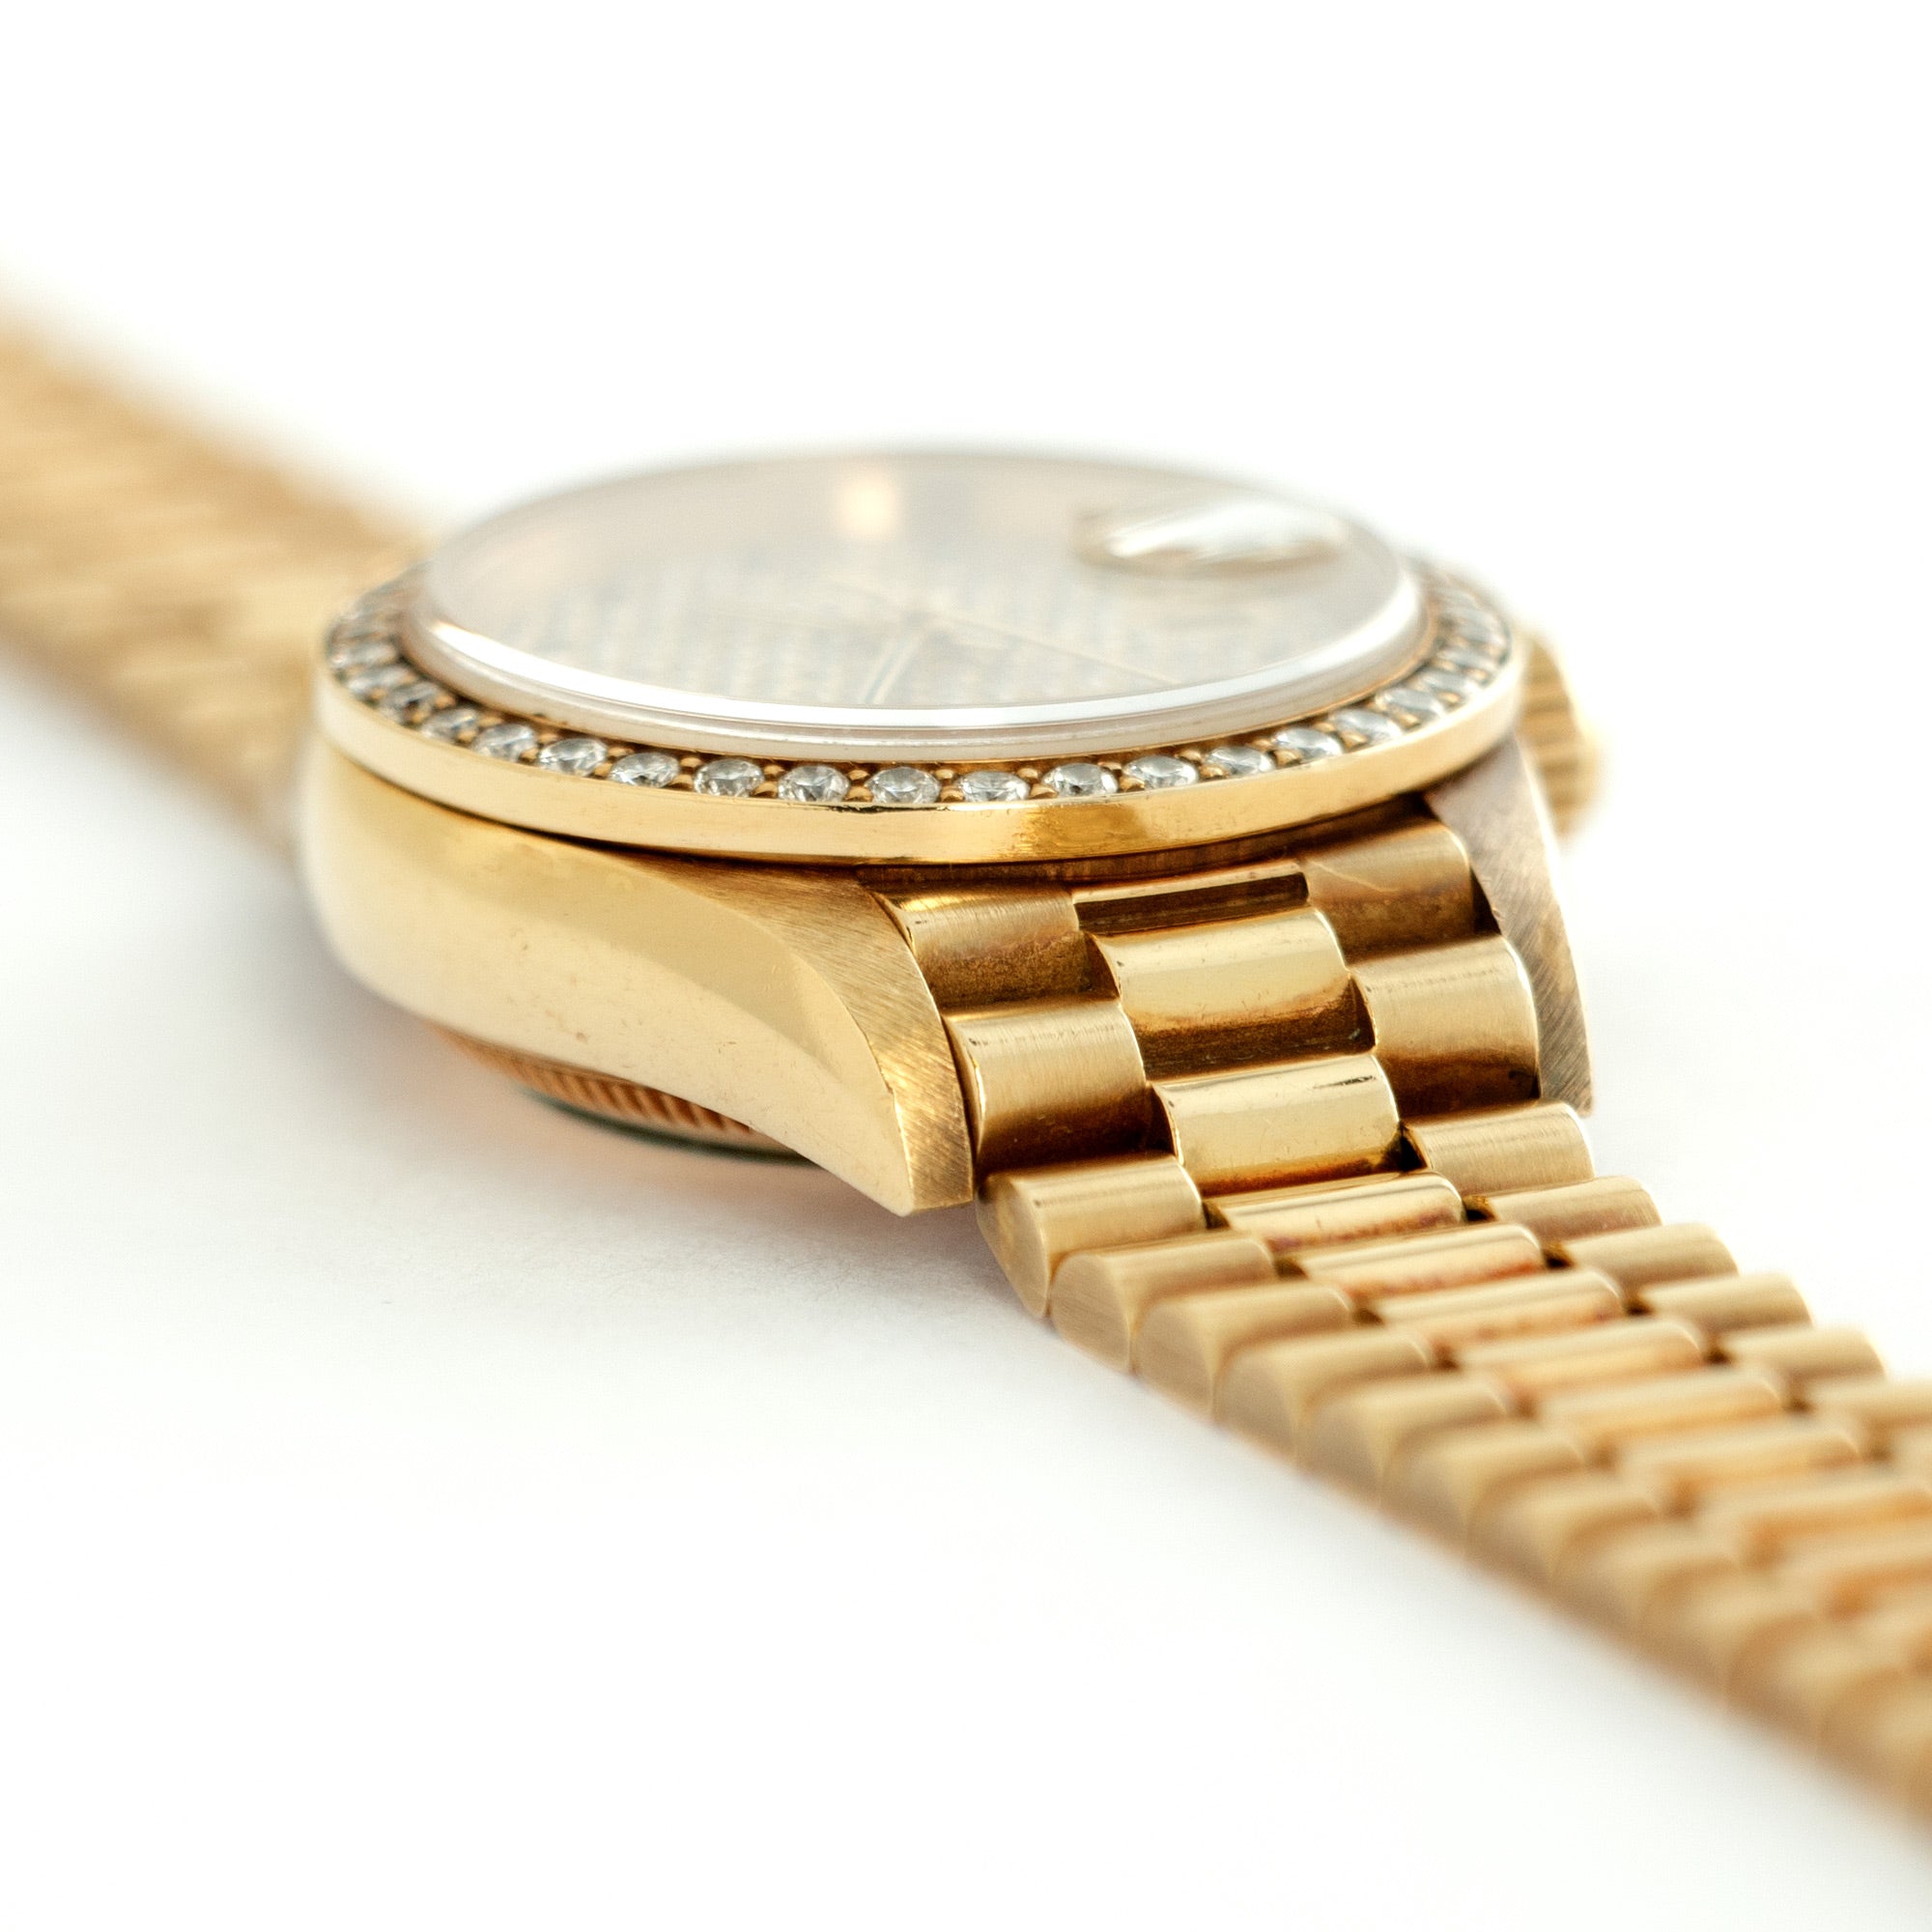 Rolex - Rolex Yellow Gold Datejust Diamond Sapphire Watch - The Keystone Watches